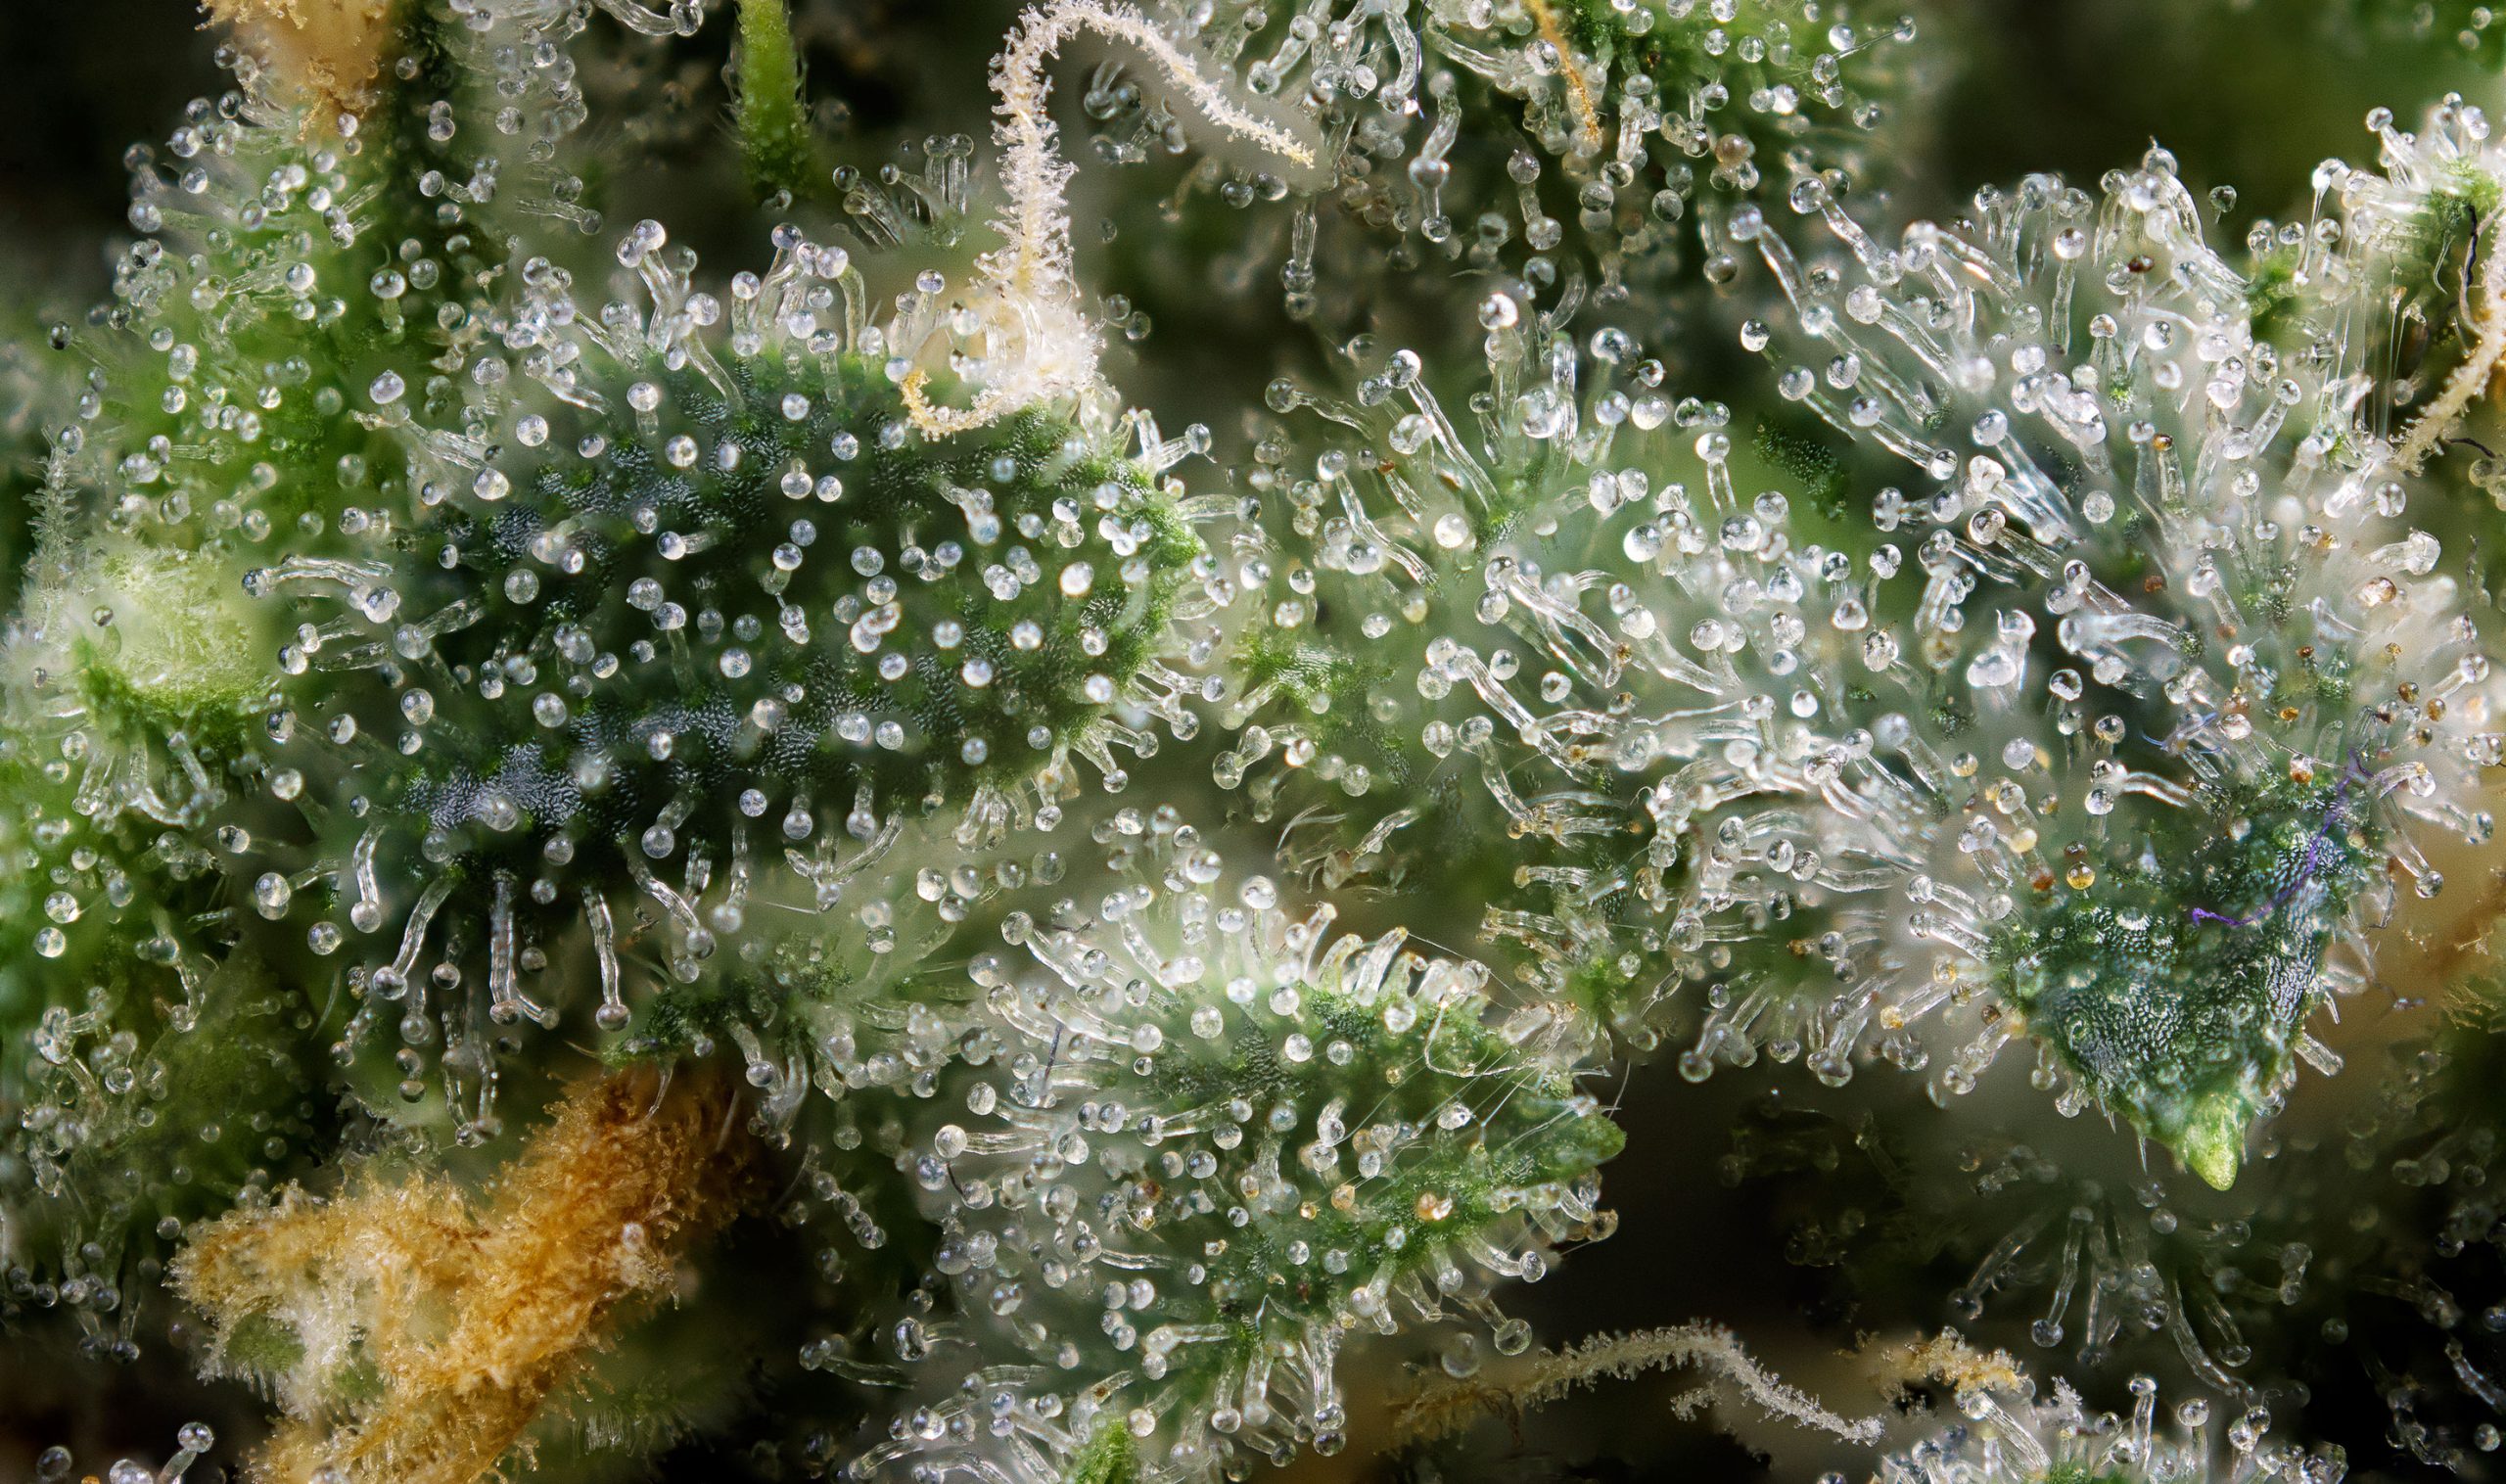 Close Up On Cannabinoids And Crystals